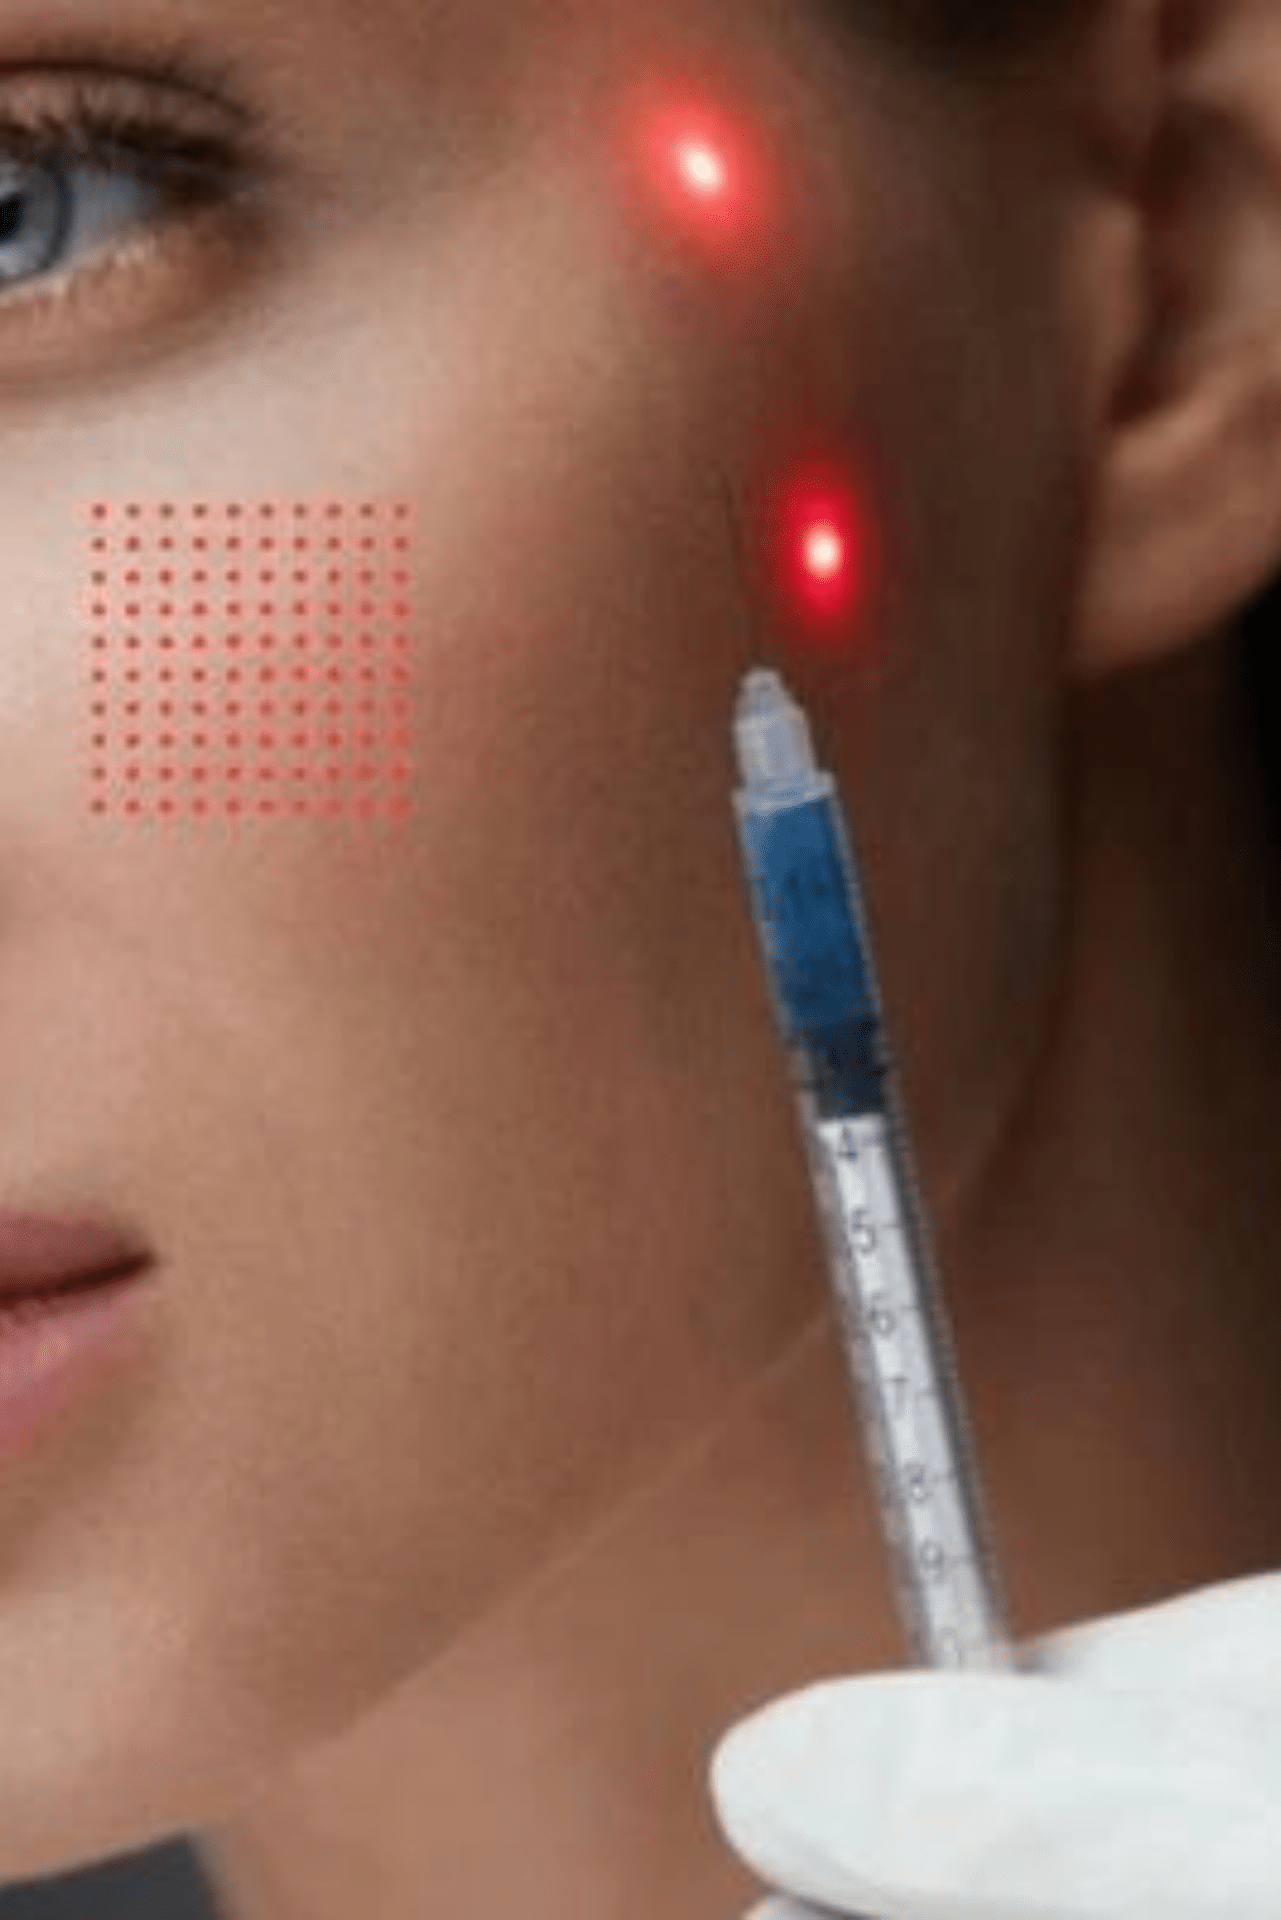 Rejuvenecimiento Facial y Corporal con Láser Endotisular: Descubre Avances Innovadores en Medicina Estética